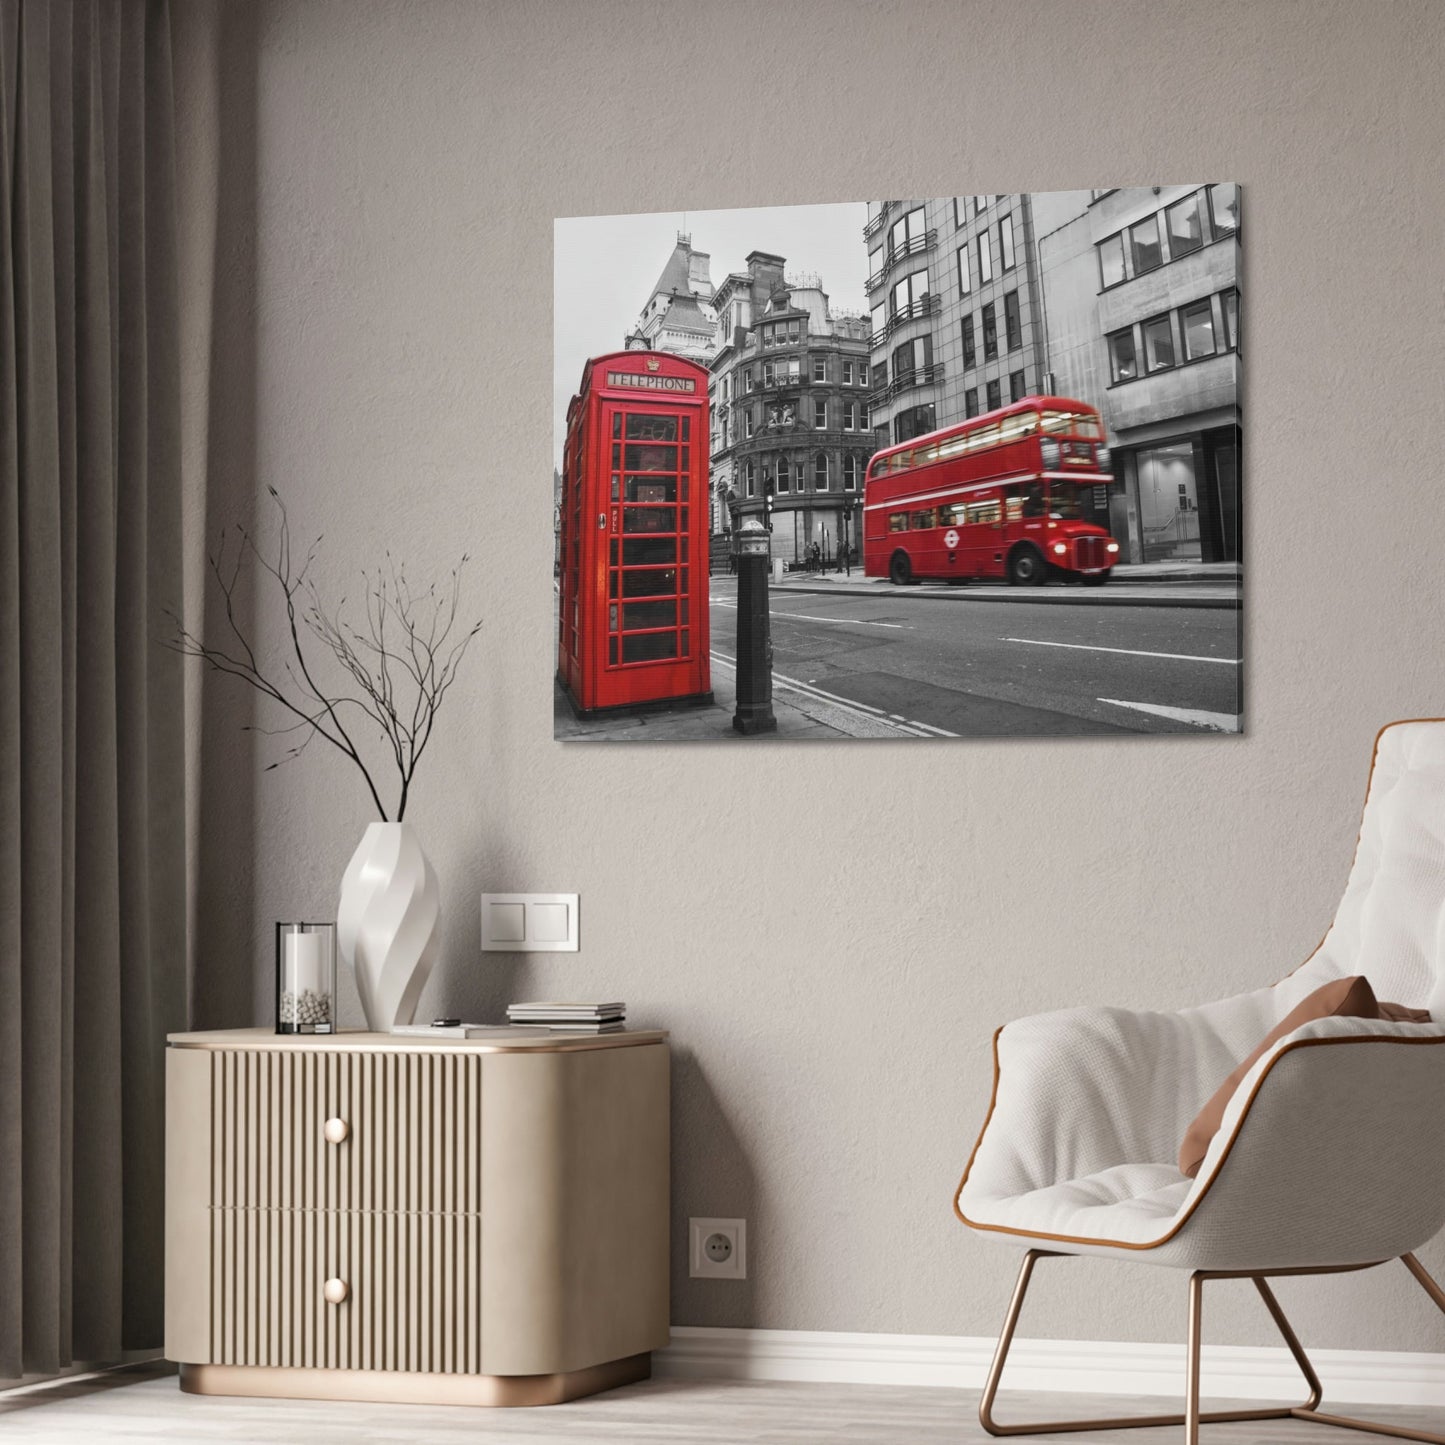 Urban Journeys Unveiled: Artistic Bus Canvas Print